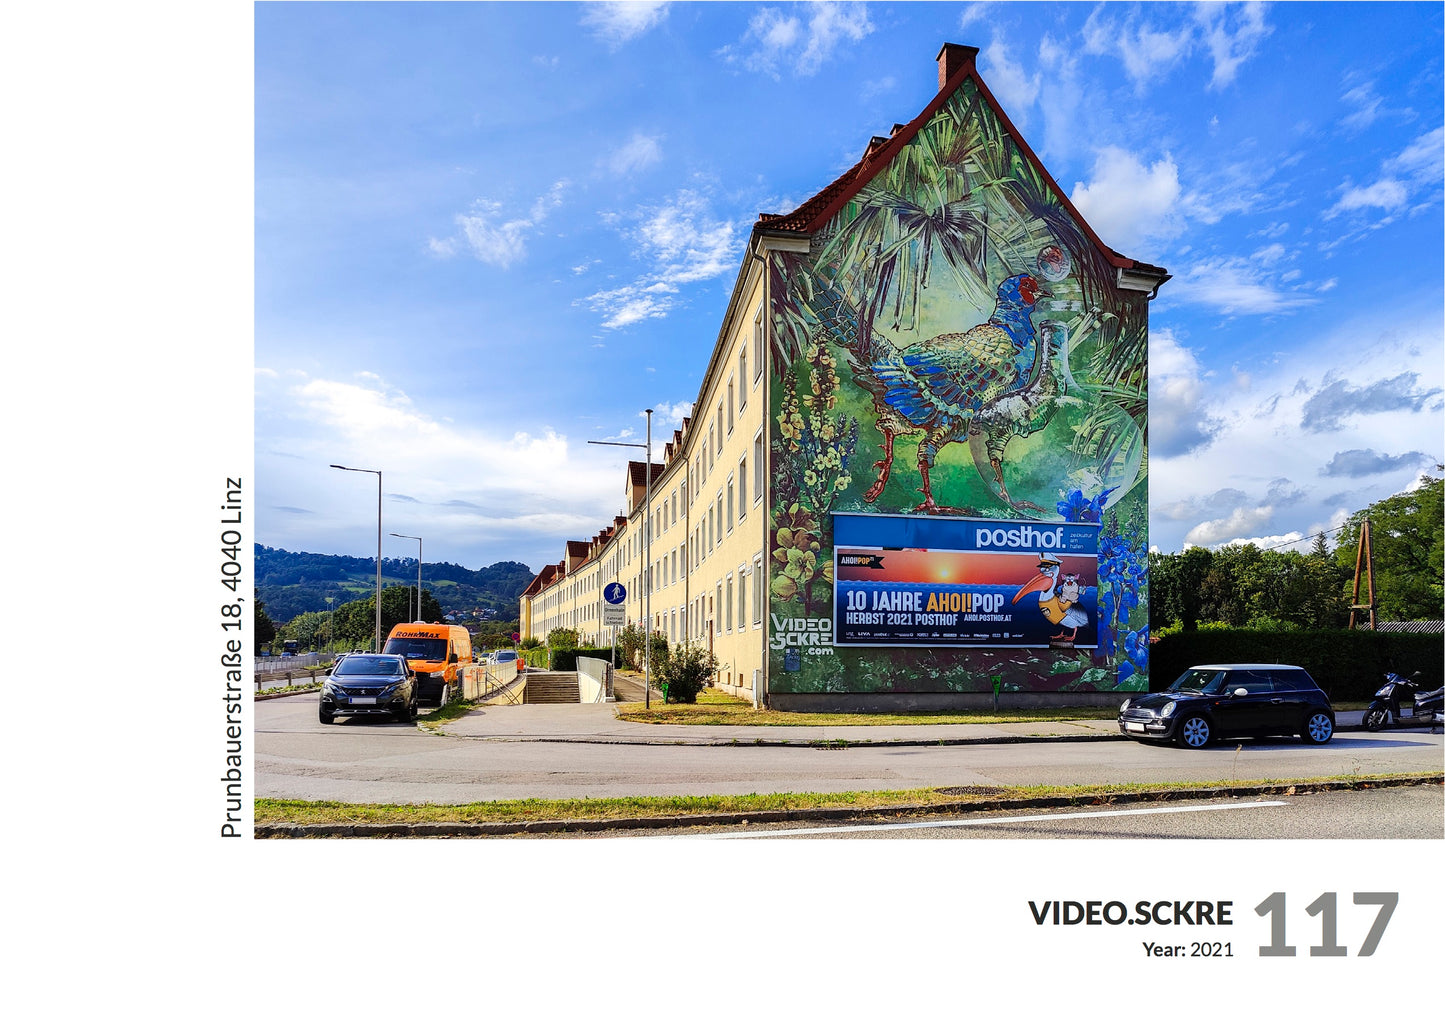 Street Art Guide Austria